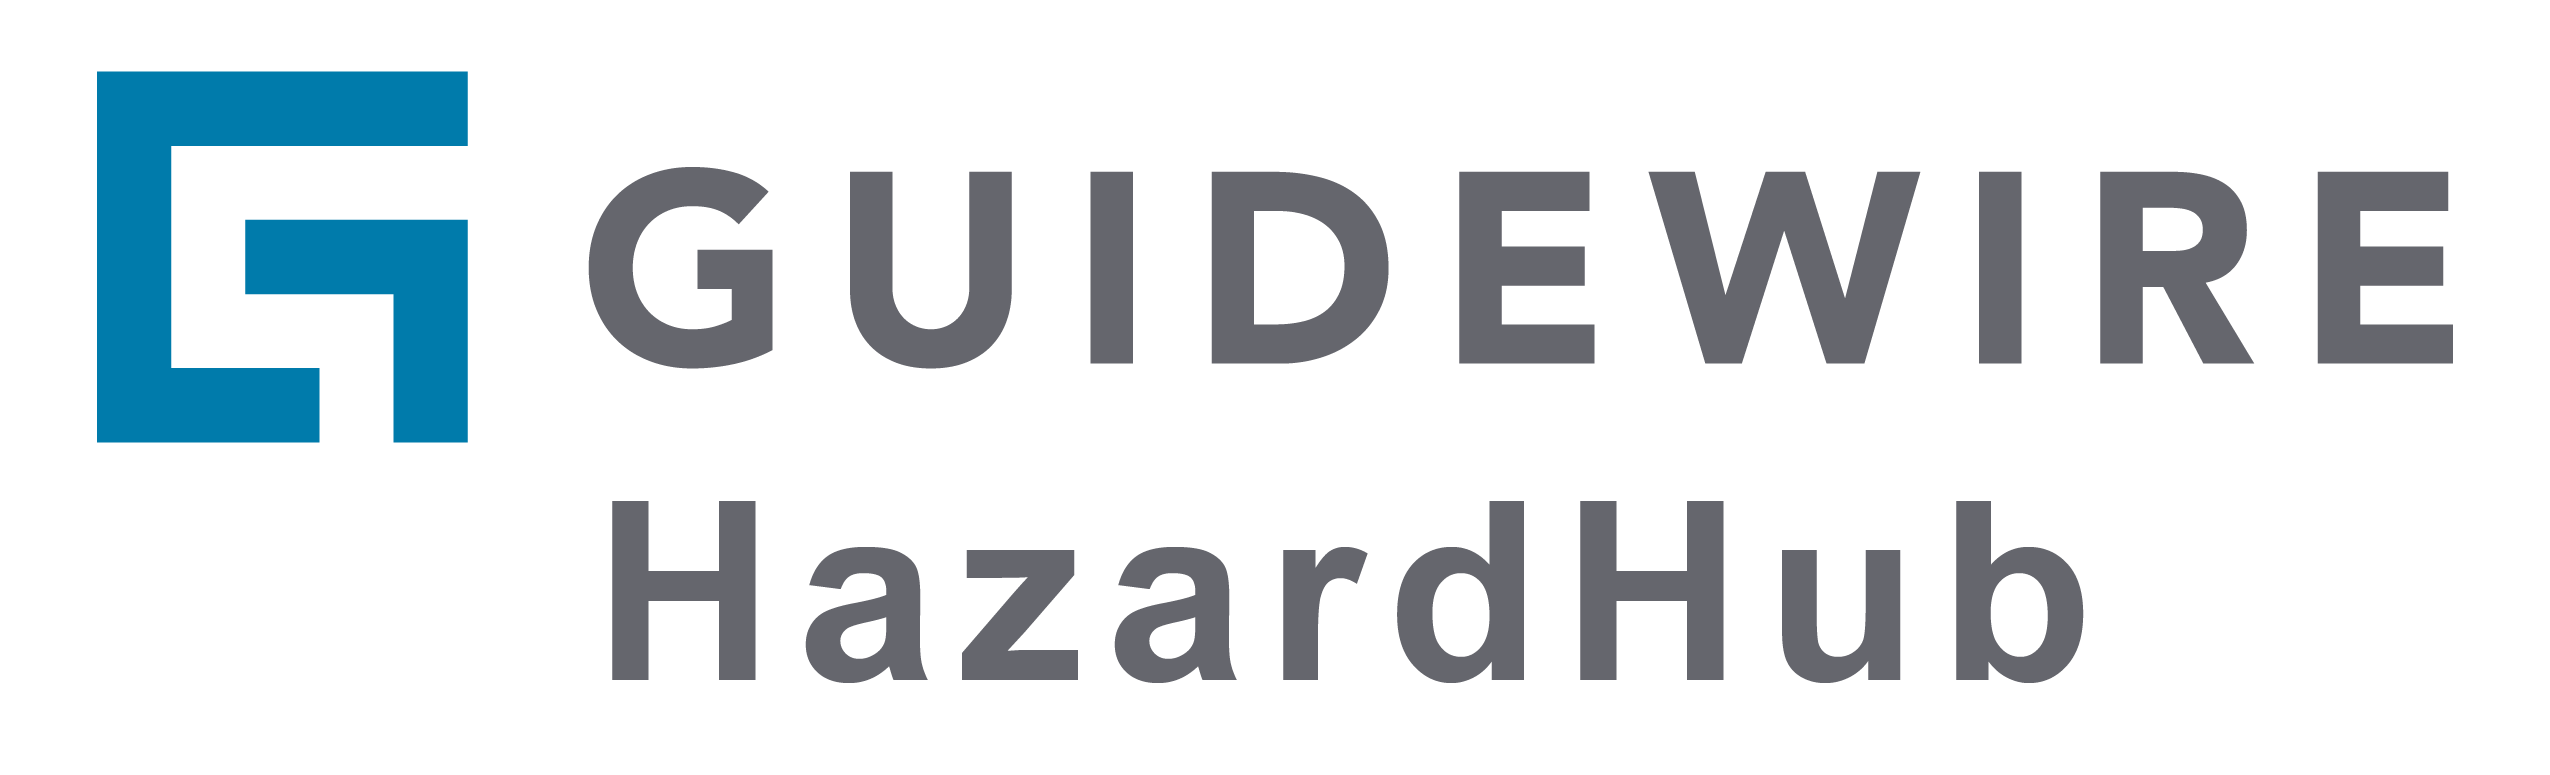 Guidewire-HazardHub-new-logo